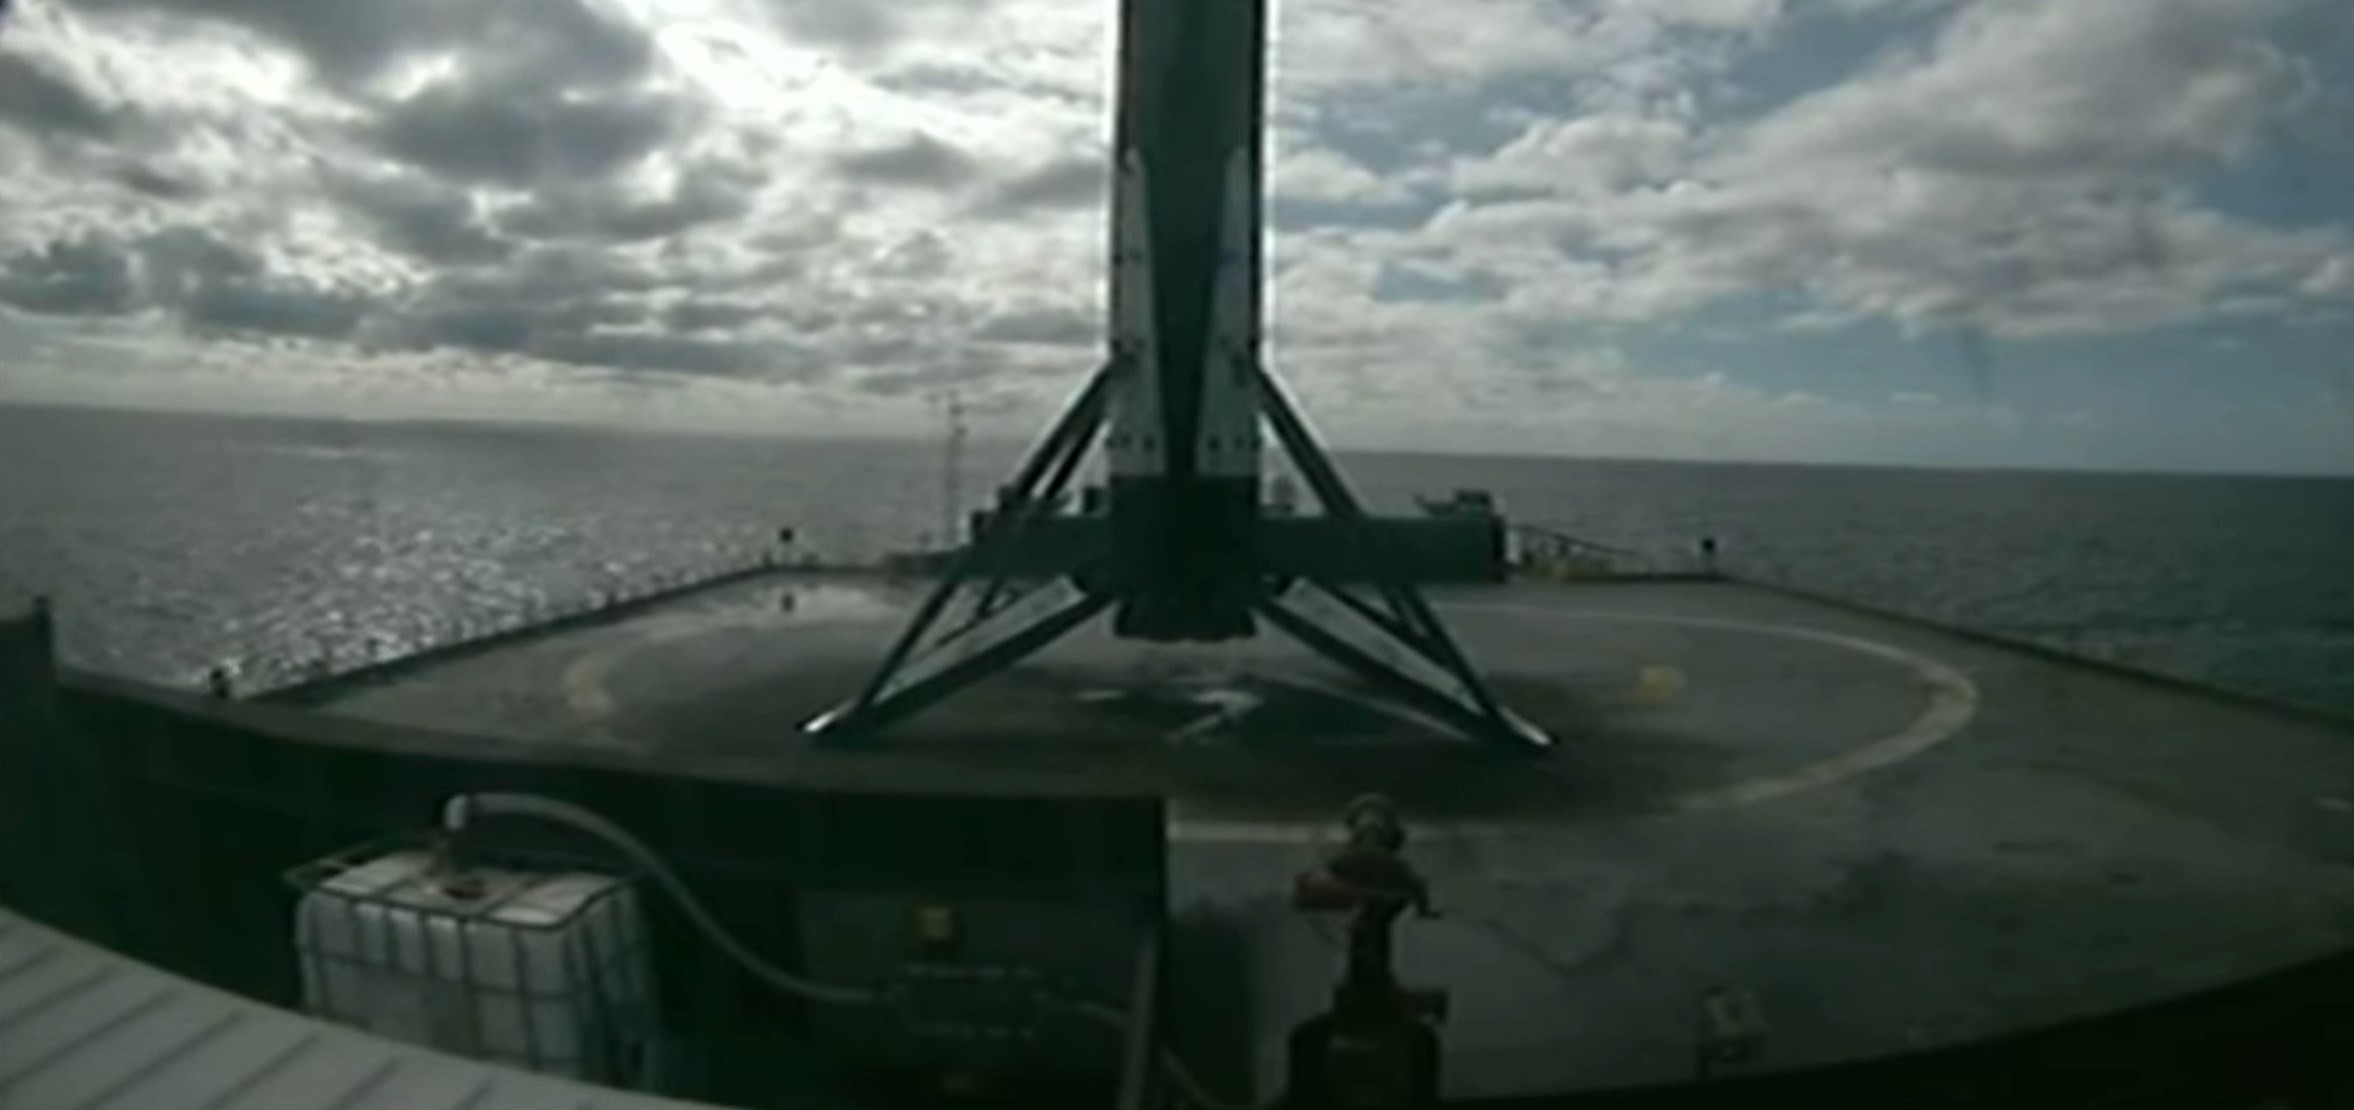 Starlink-1 v1.0 webcast (SpaceX) B1048 OCISLY landing 3 crop